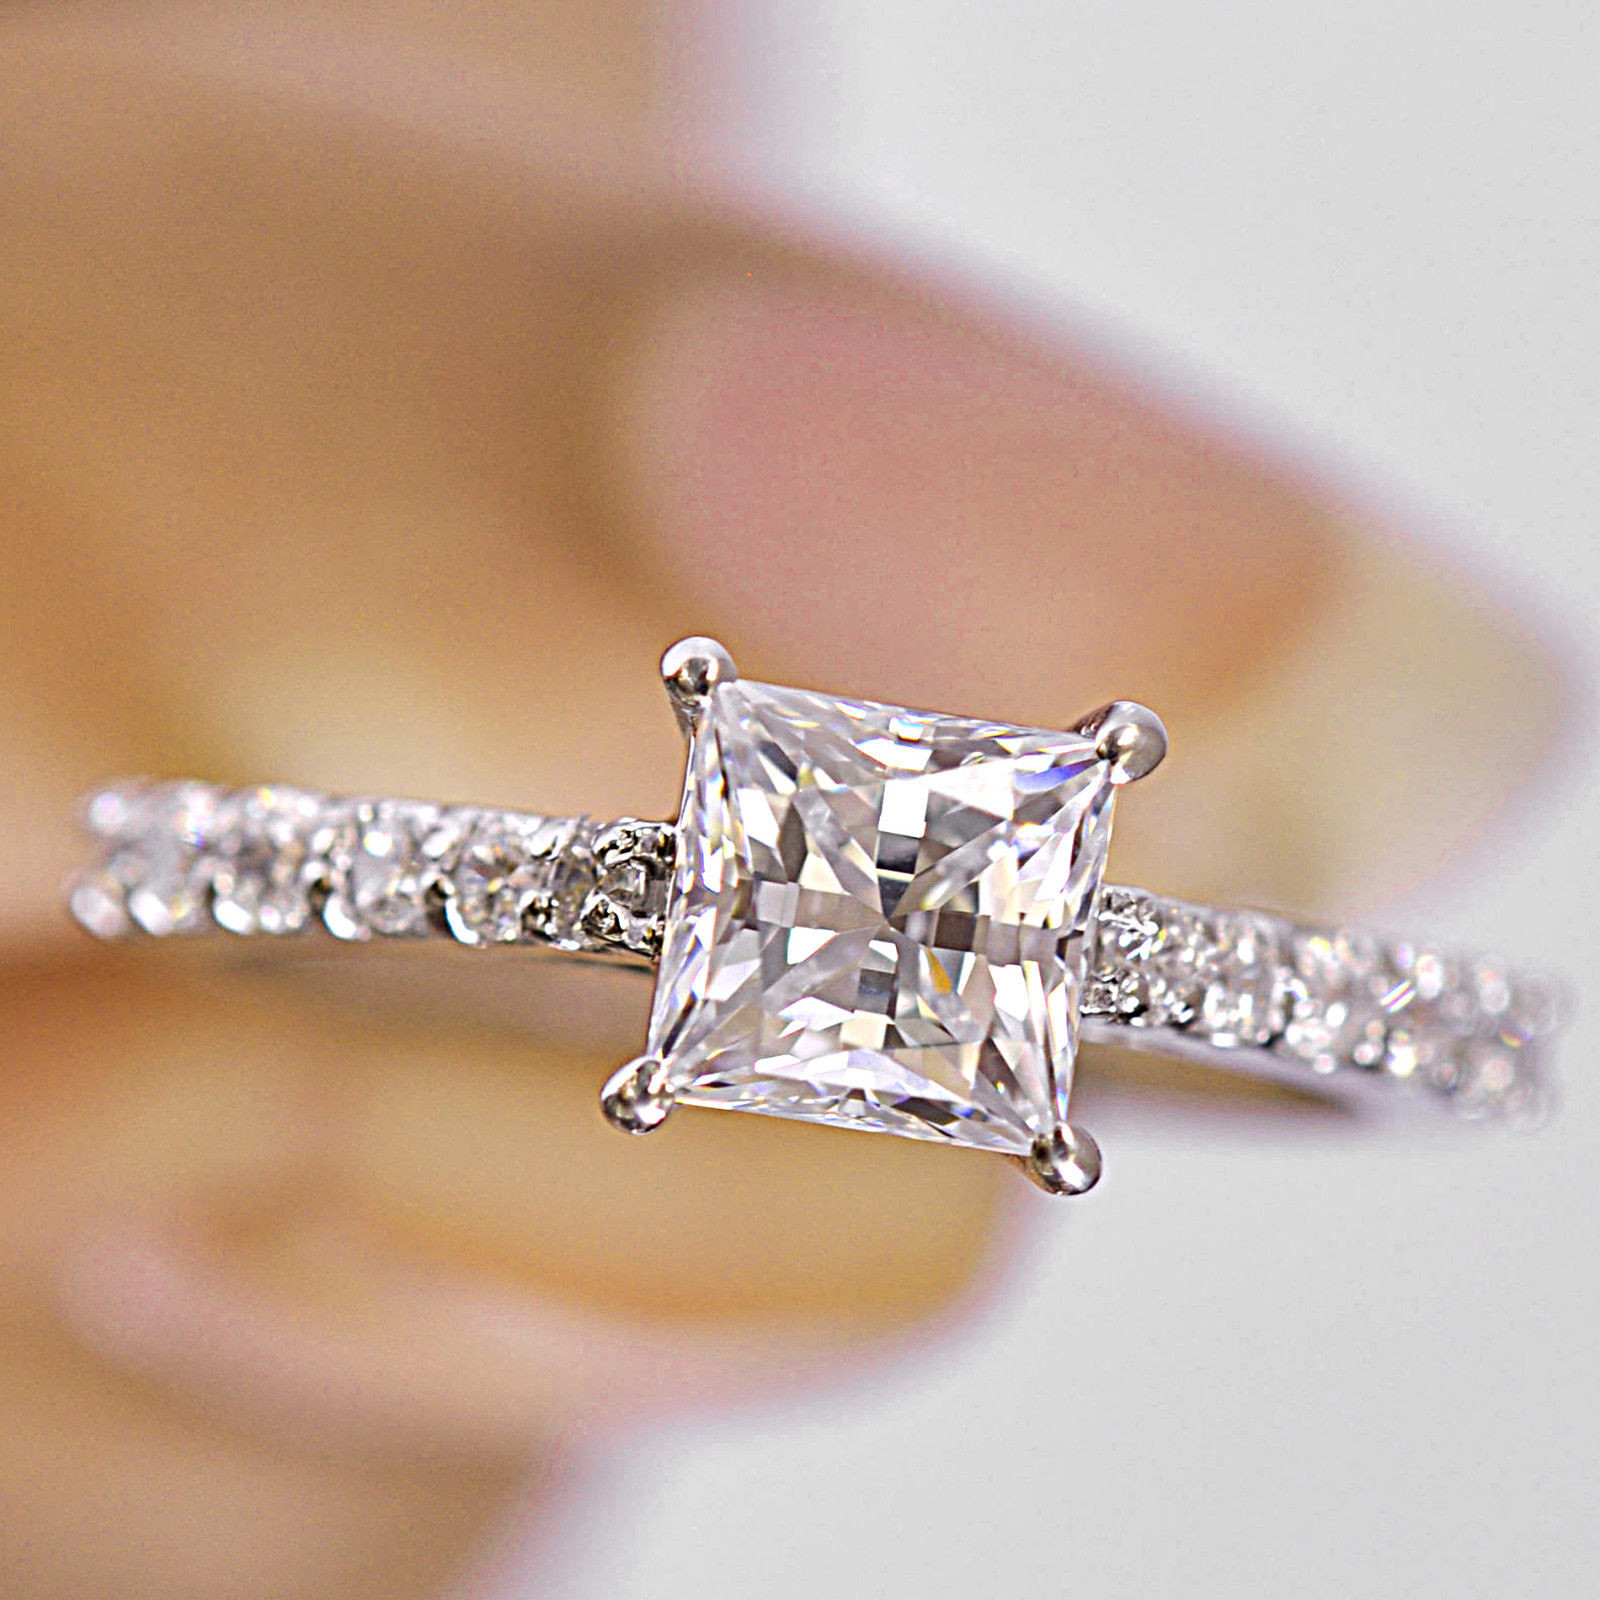 2 Ct Princess Cut Engagement Rings
 Brillaint Princess Cut 2 5 Ct Solitaire Engagement Ring in